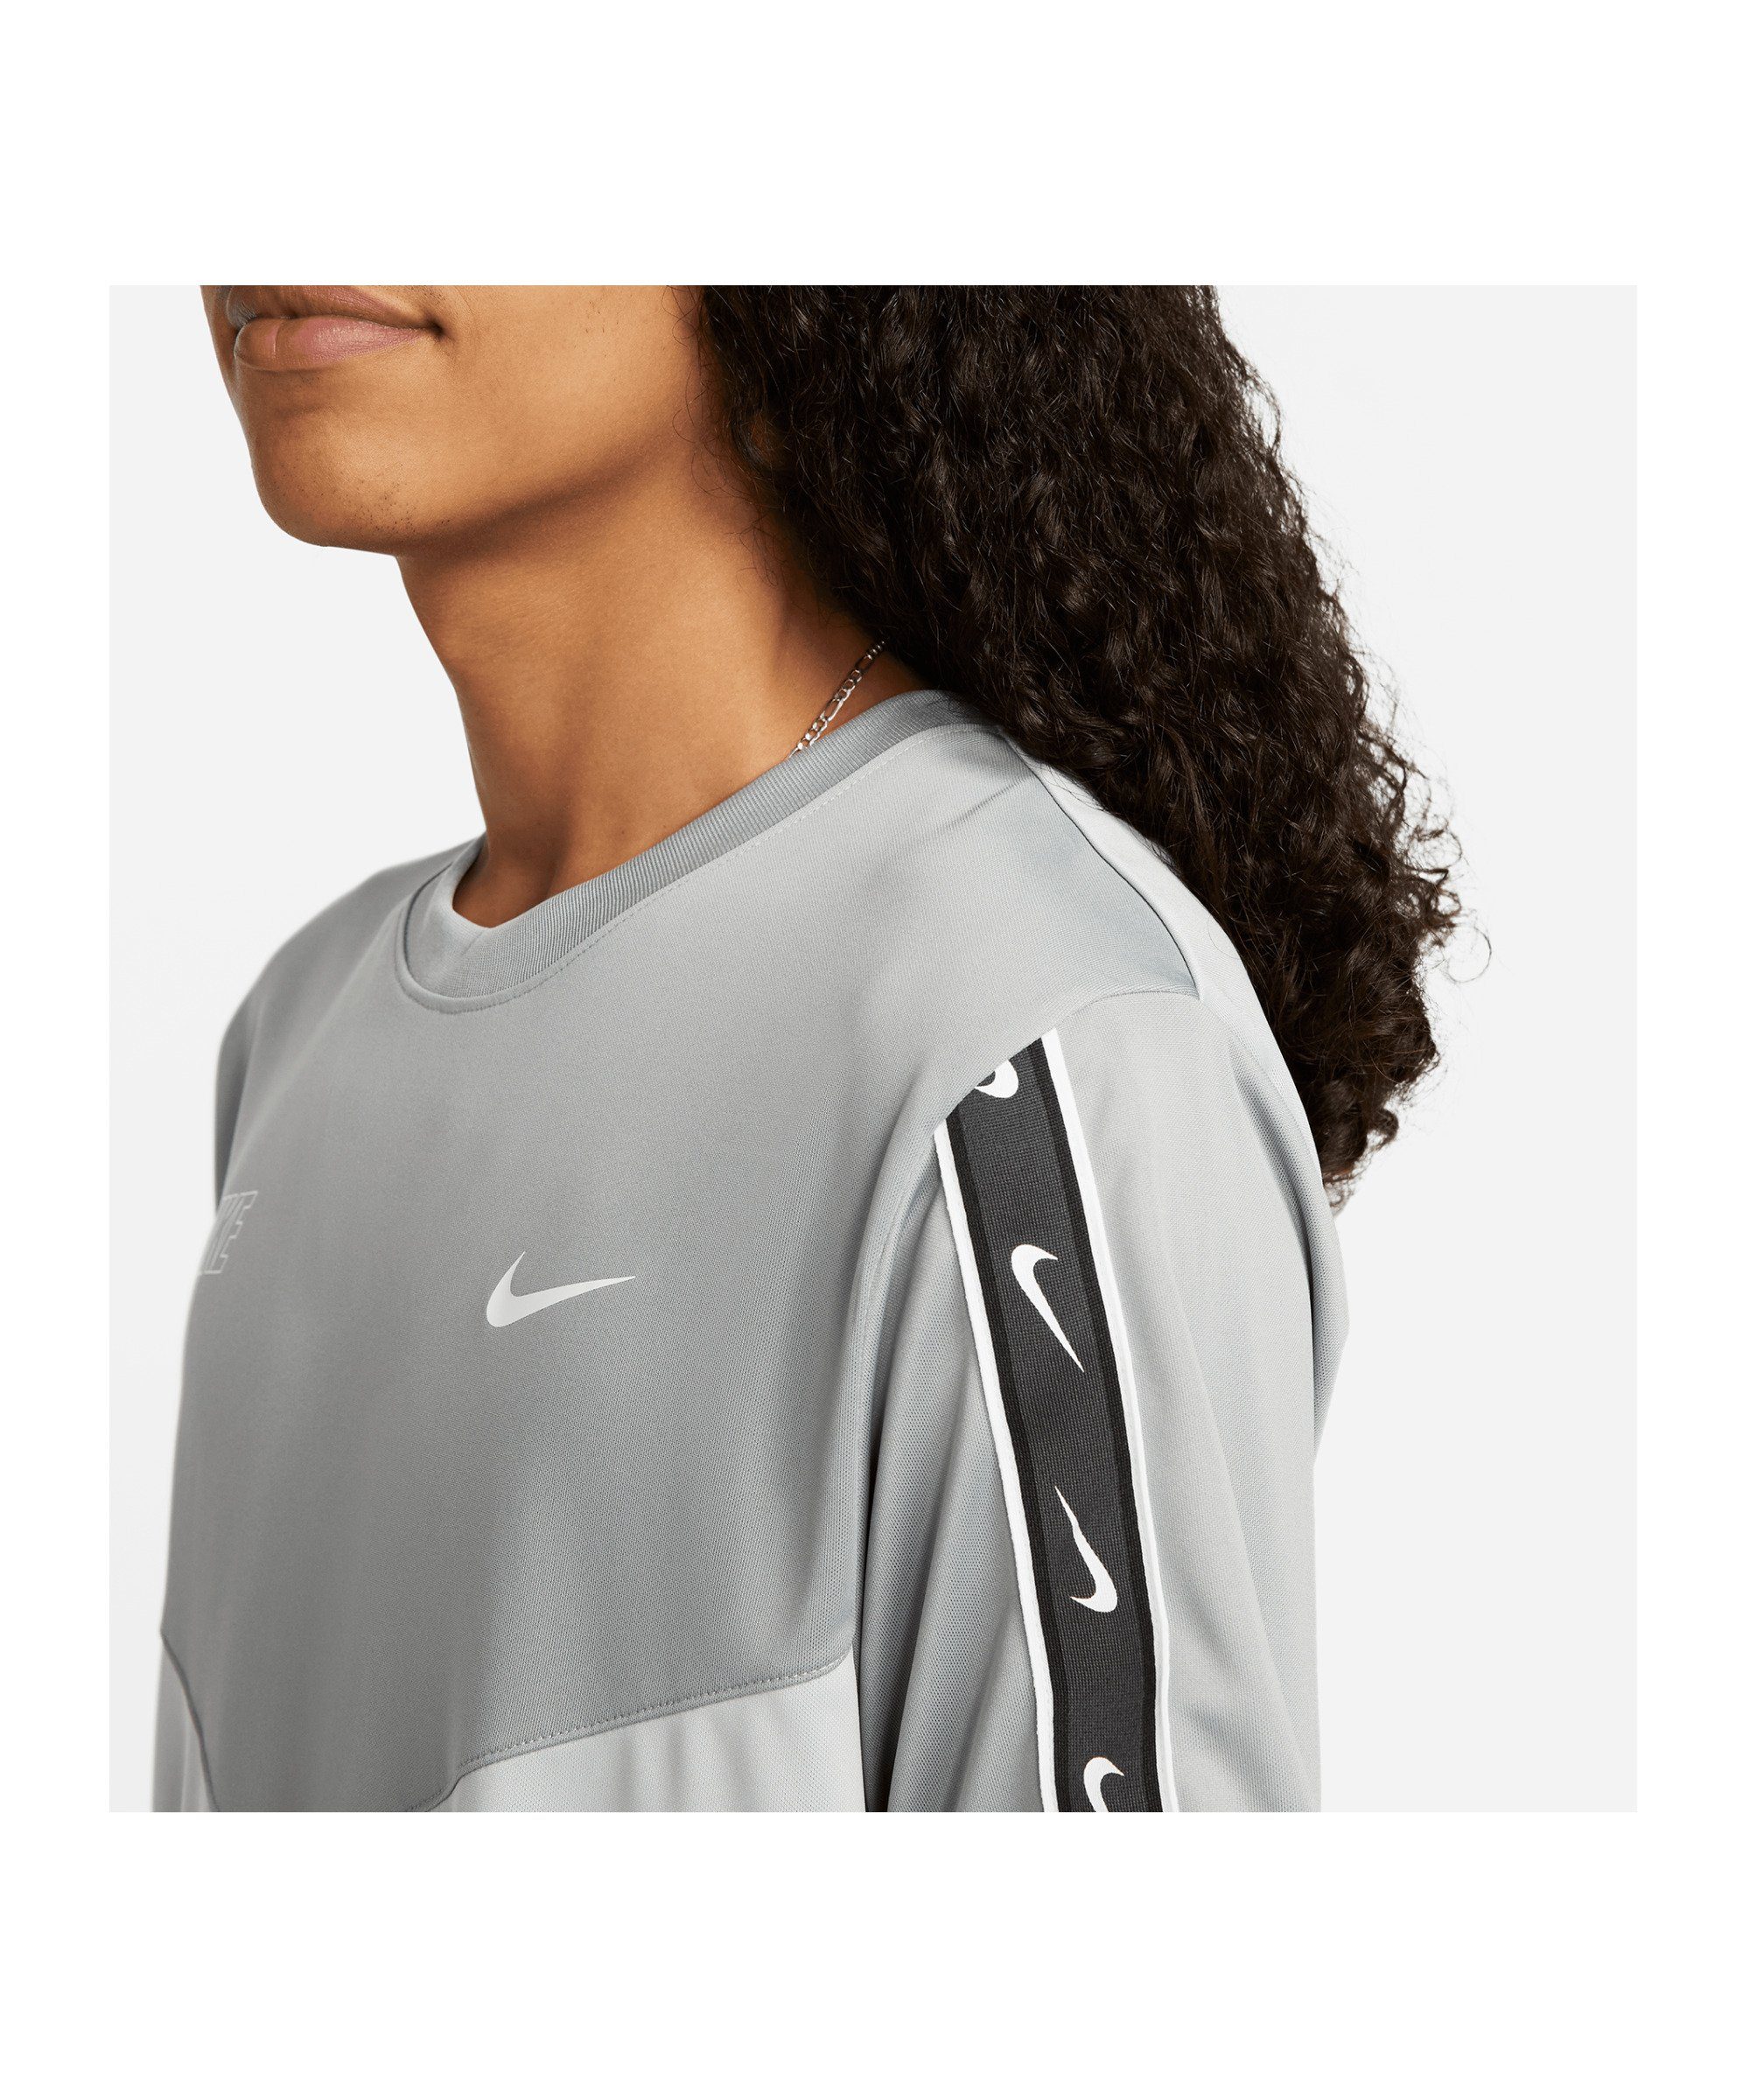 Sportswear graugrauweiss T-Shirt default T-Shirt Repeat Nike